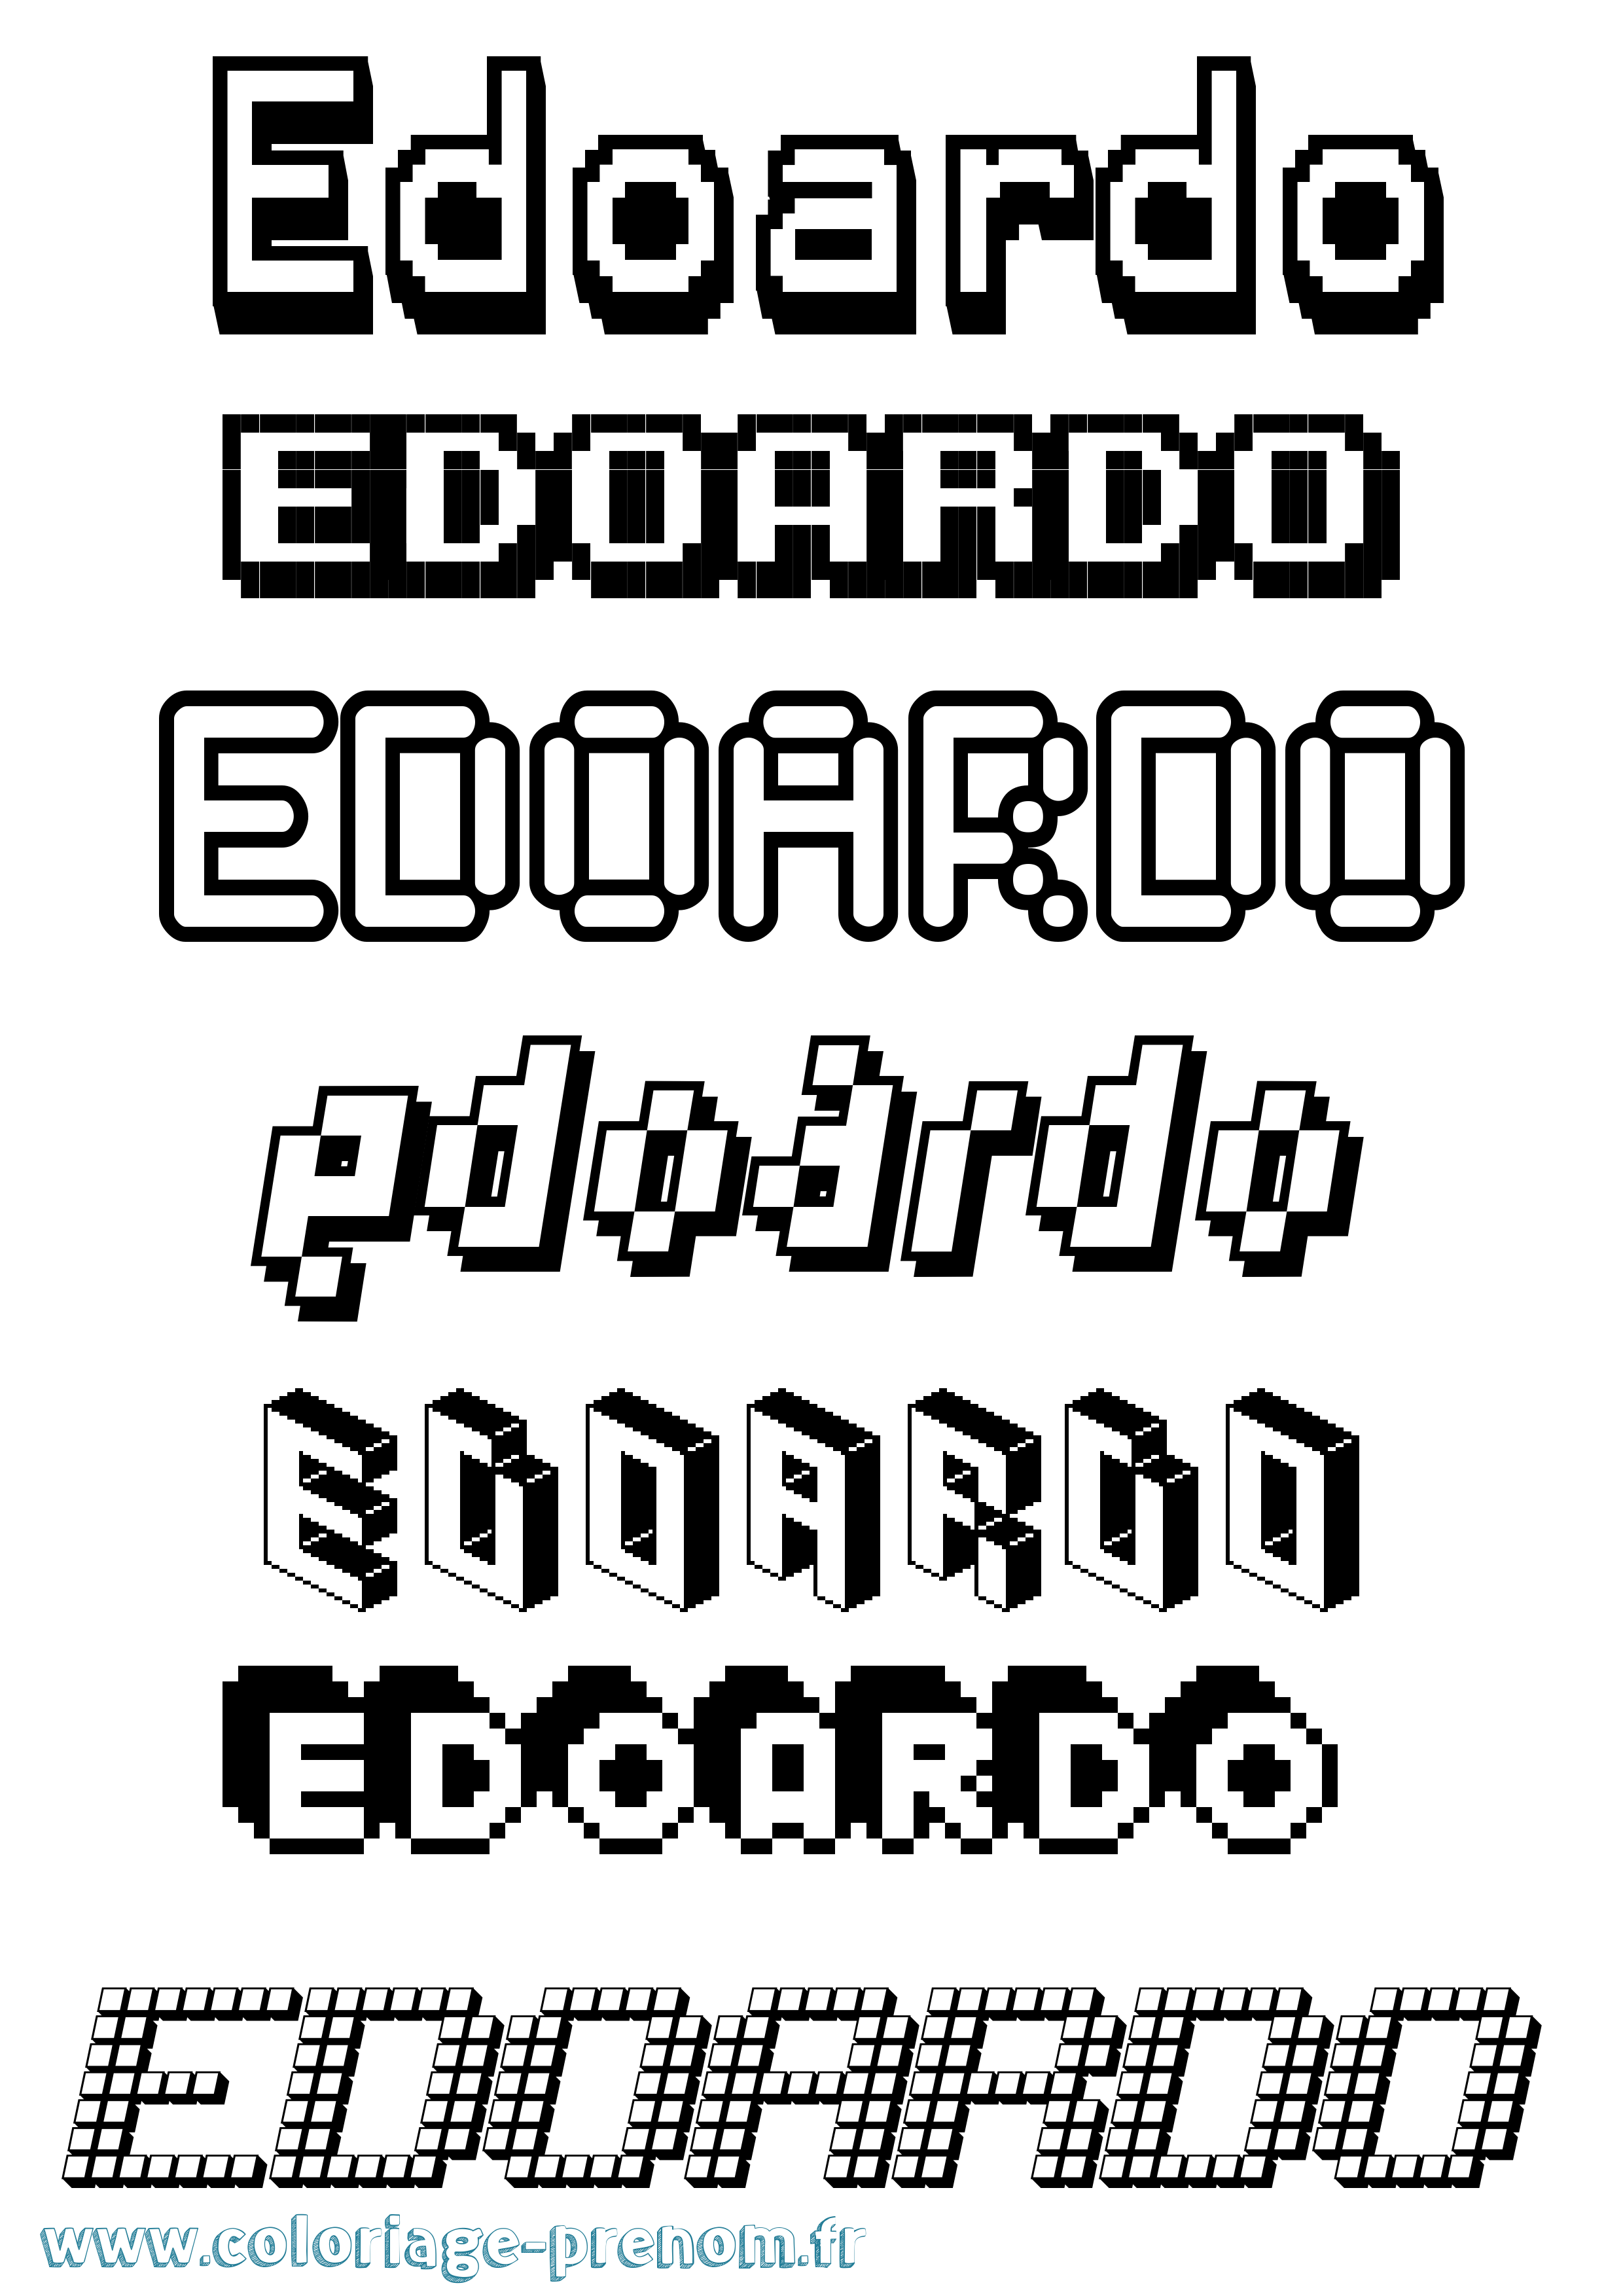 Coloriage prénom Edoardo Pixel